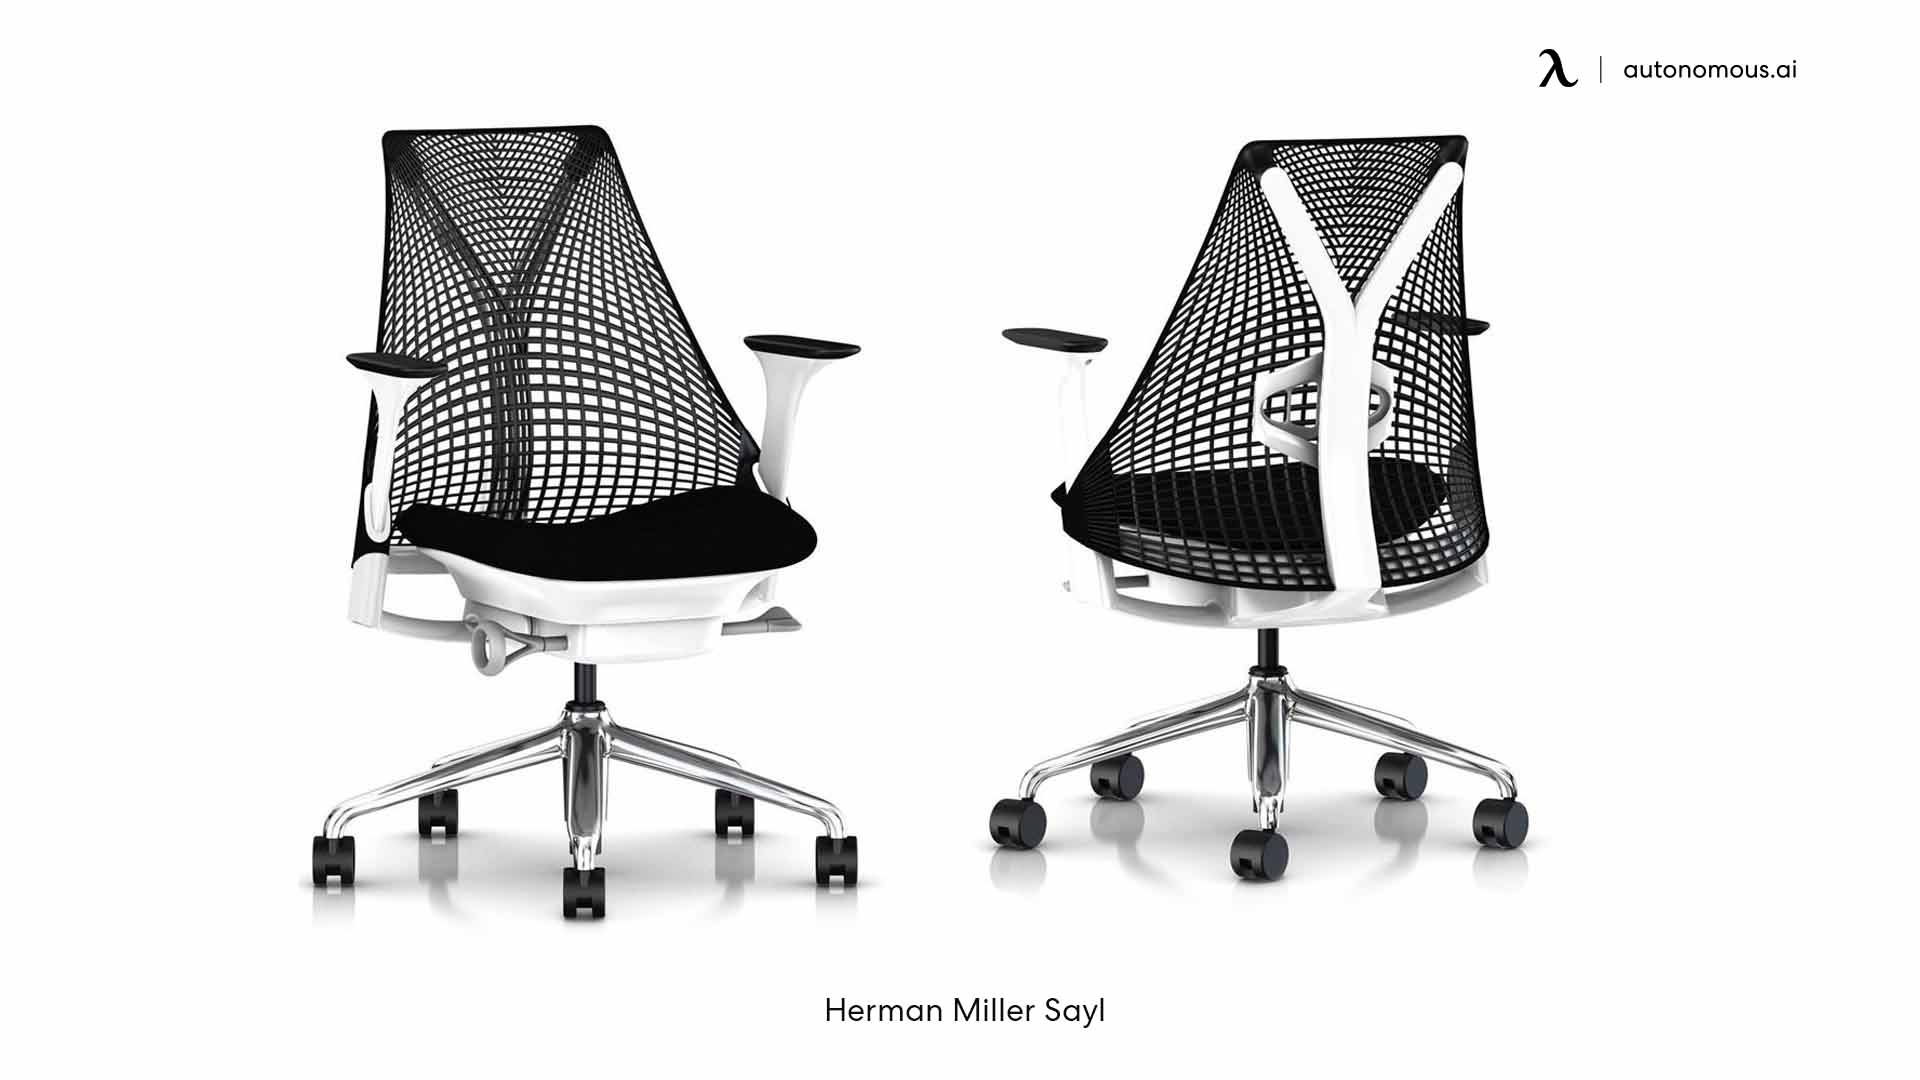 Herman Miller Sayl best desk chair